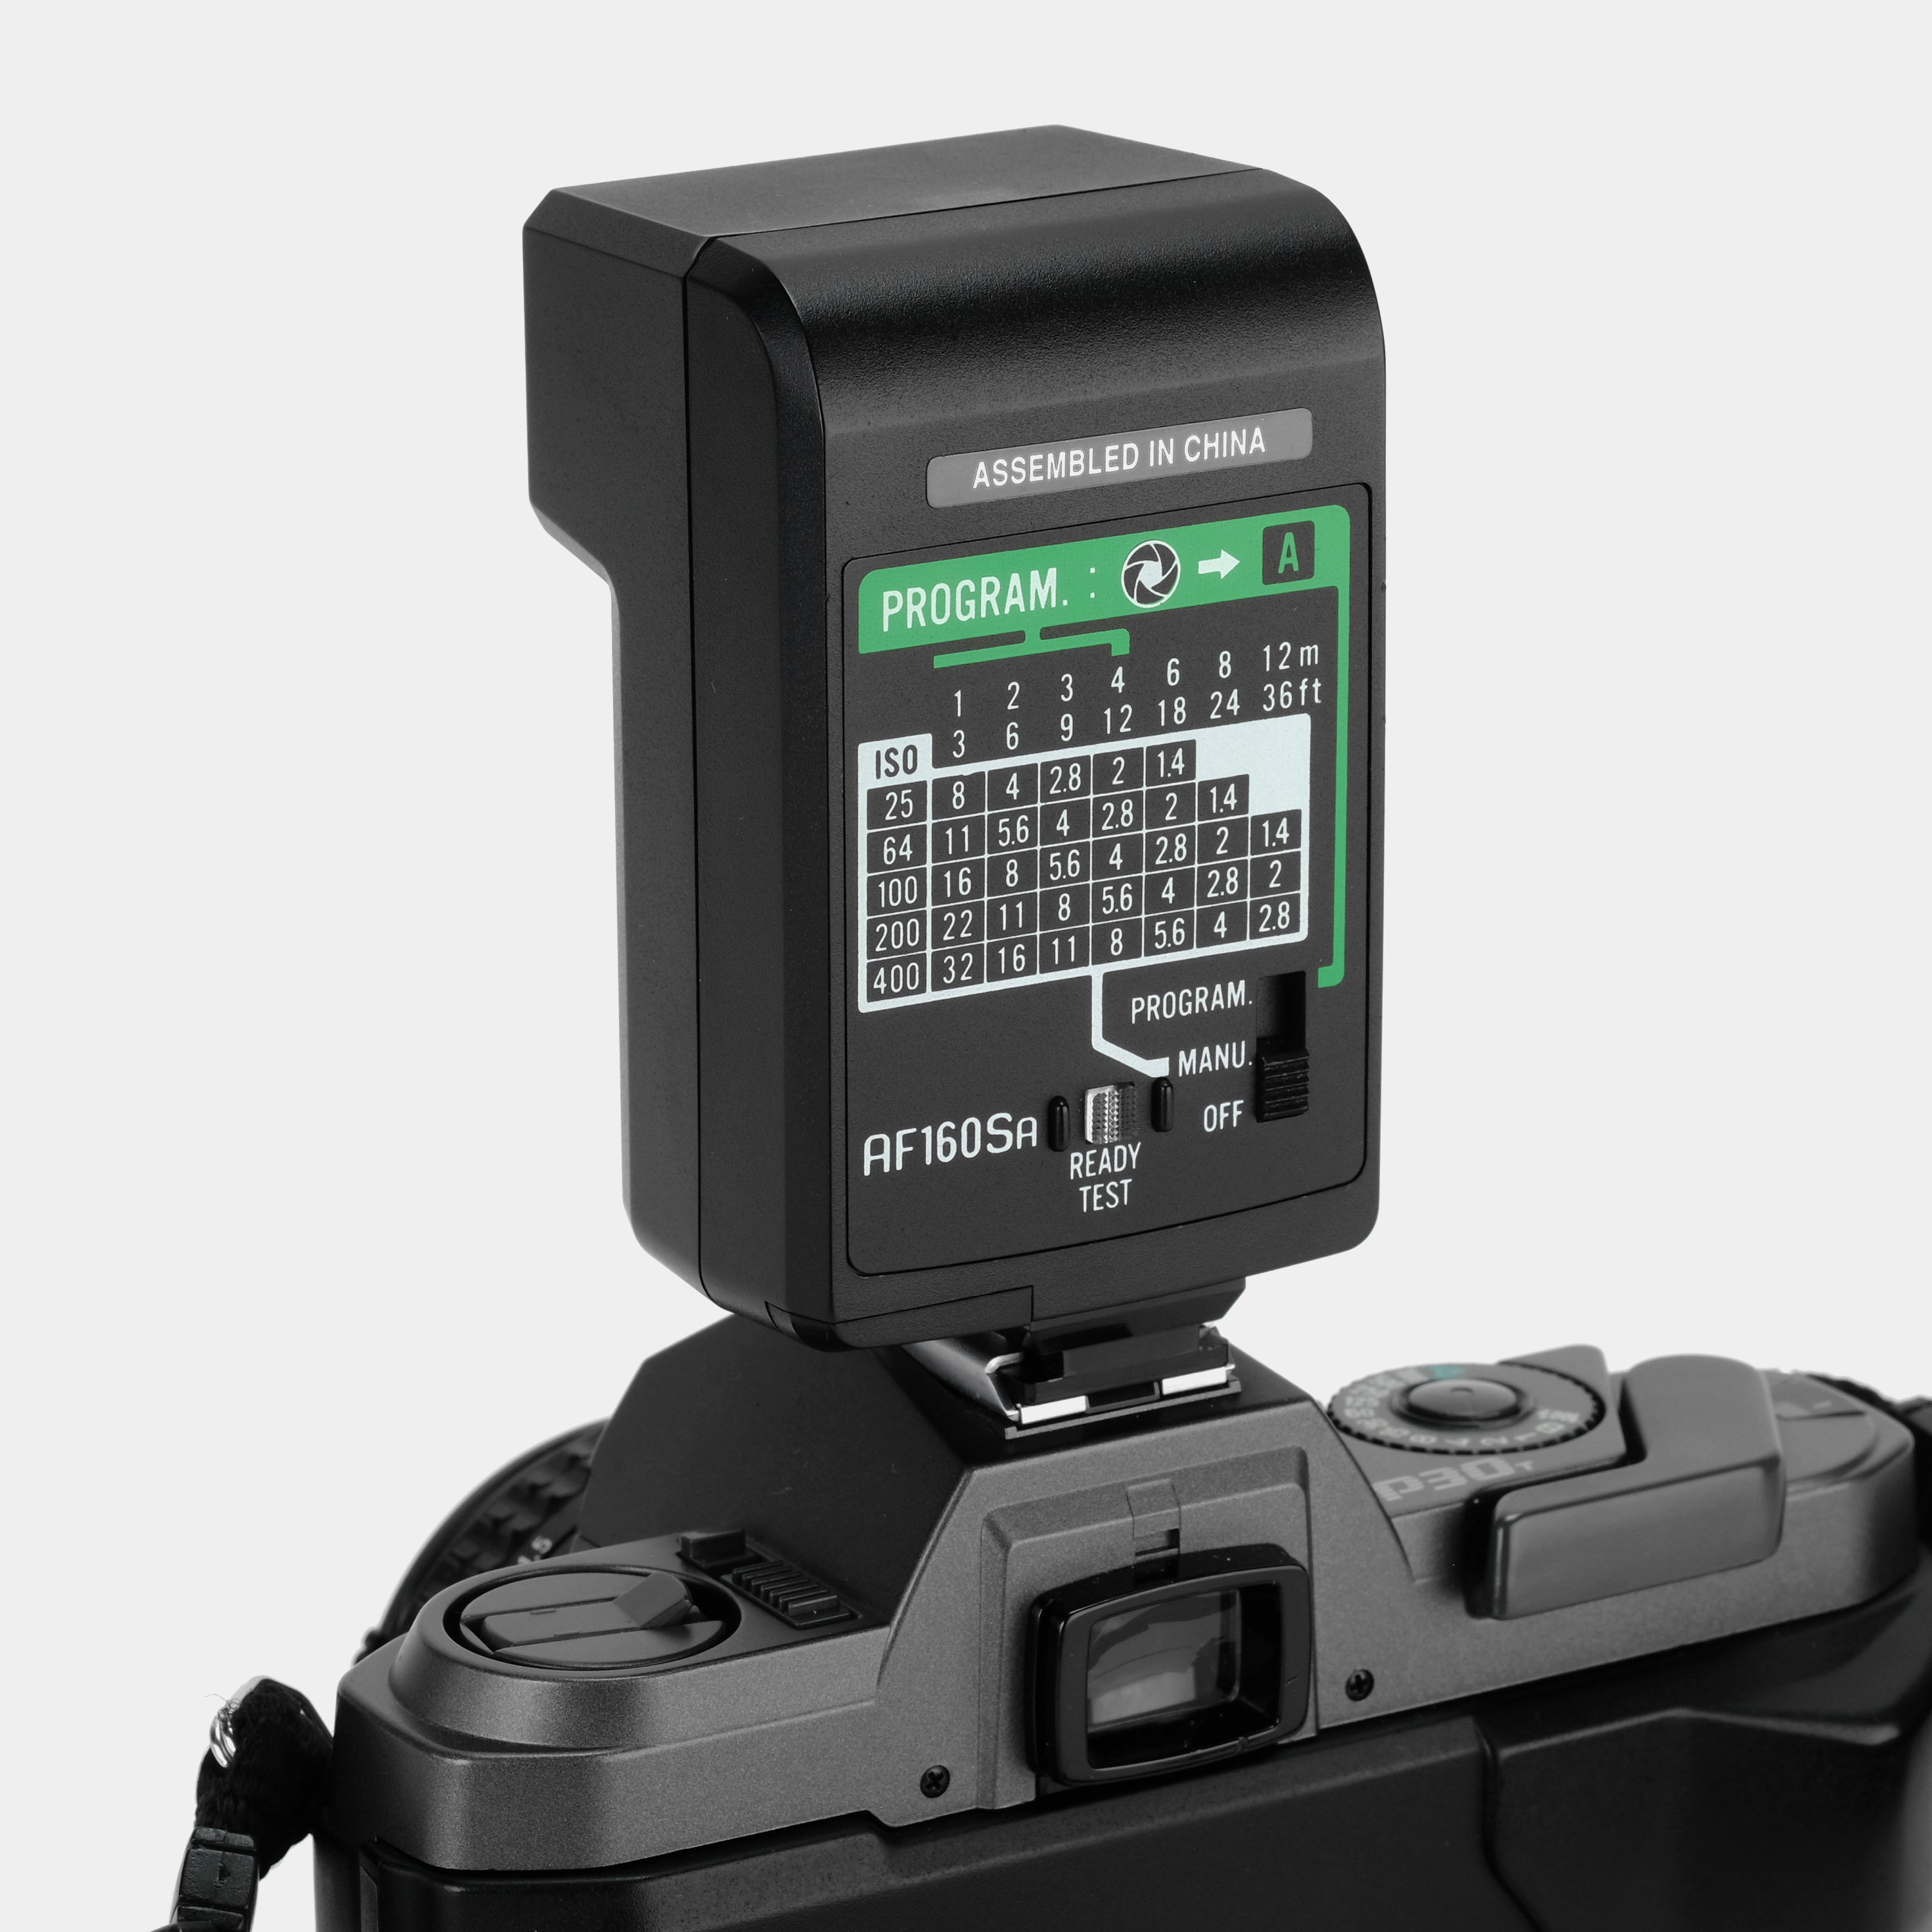 Pentax P30T 35mm SLR Film Camera